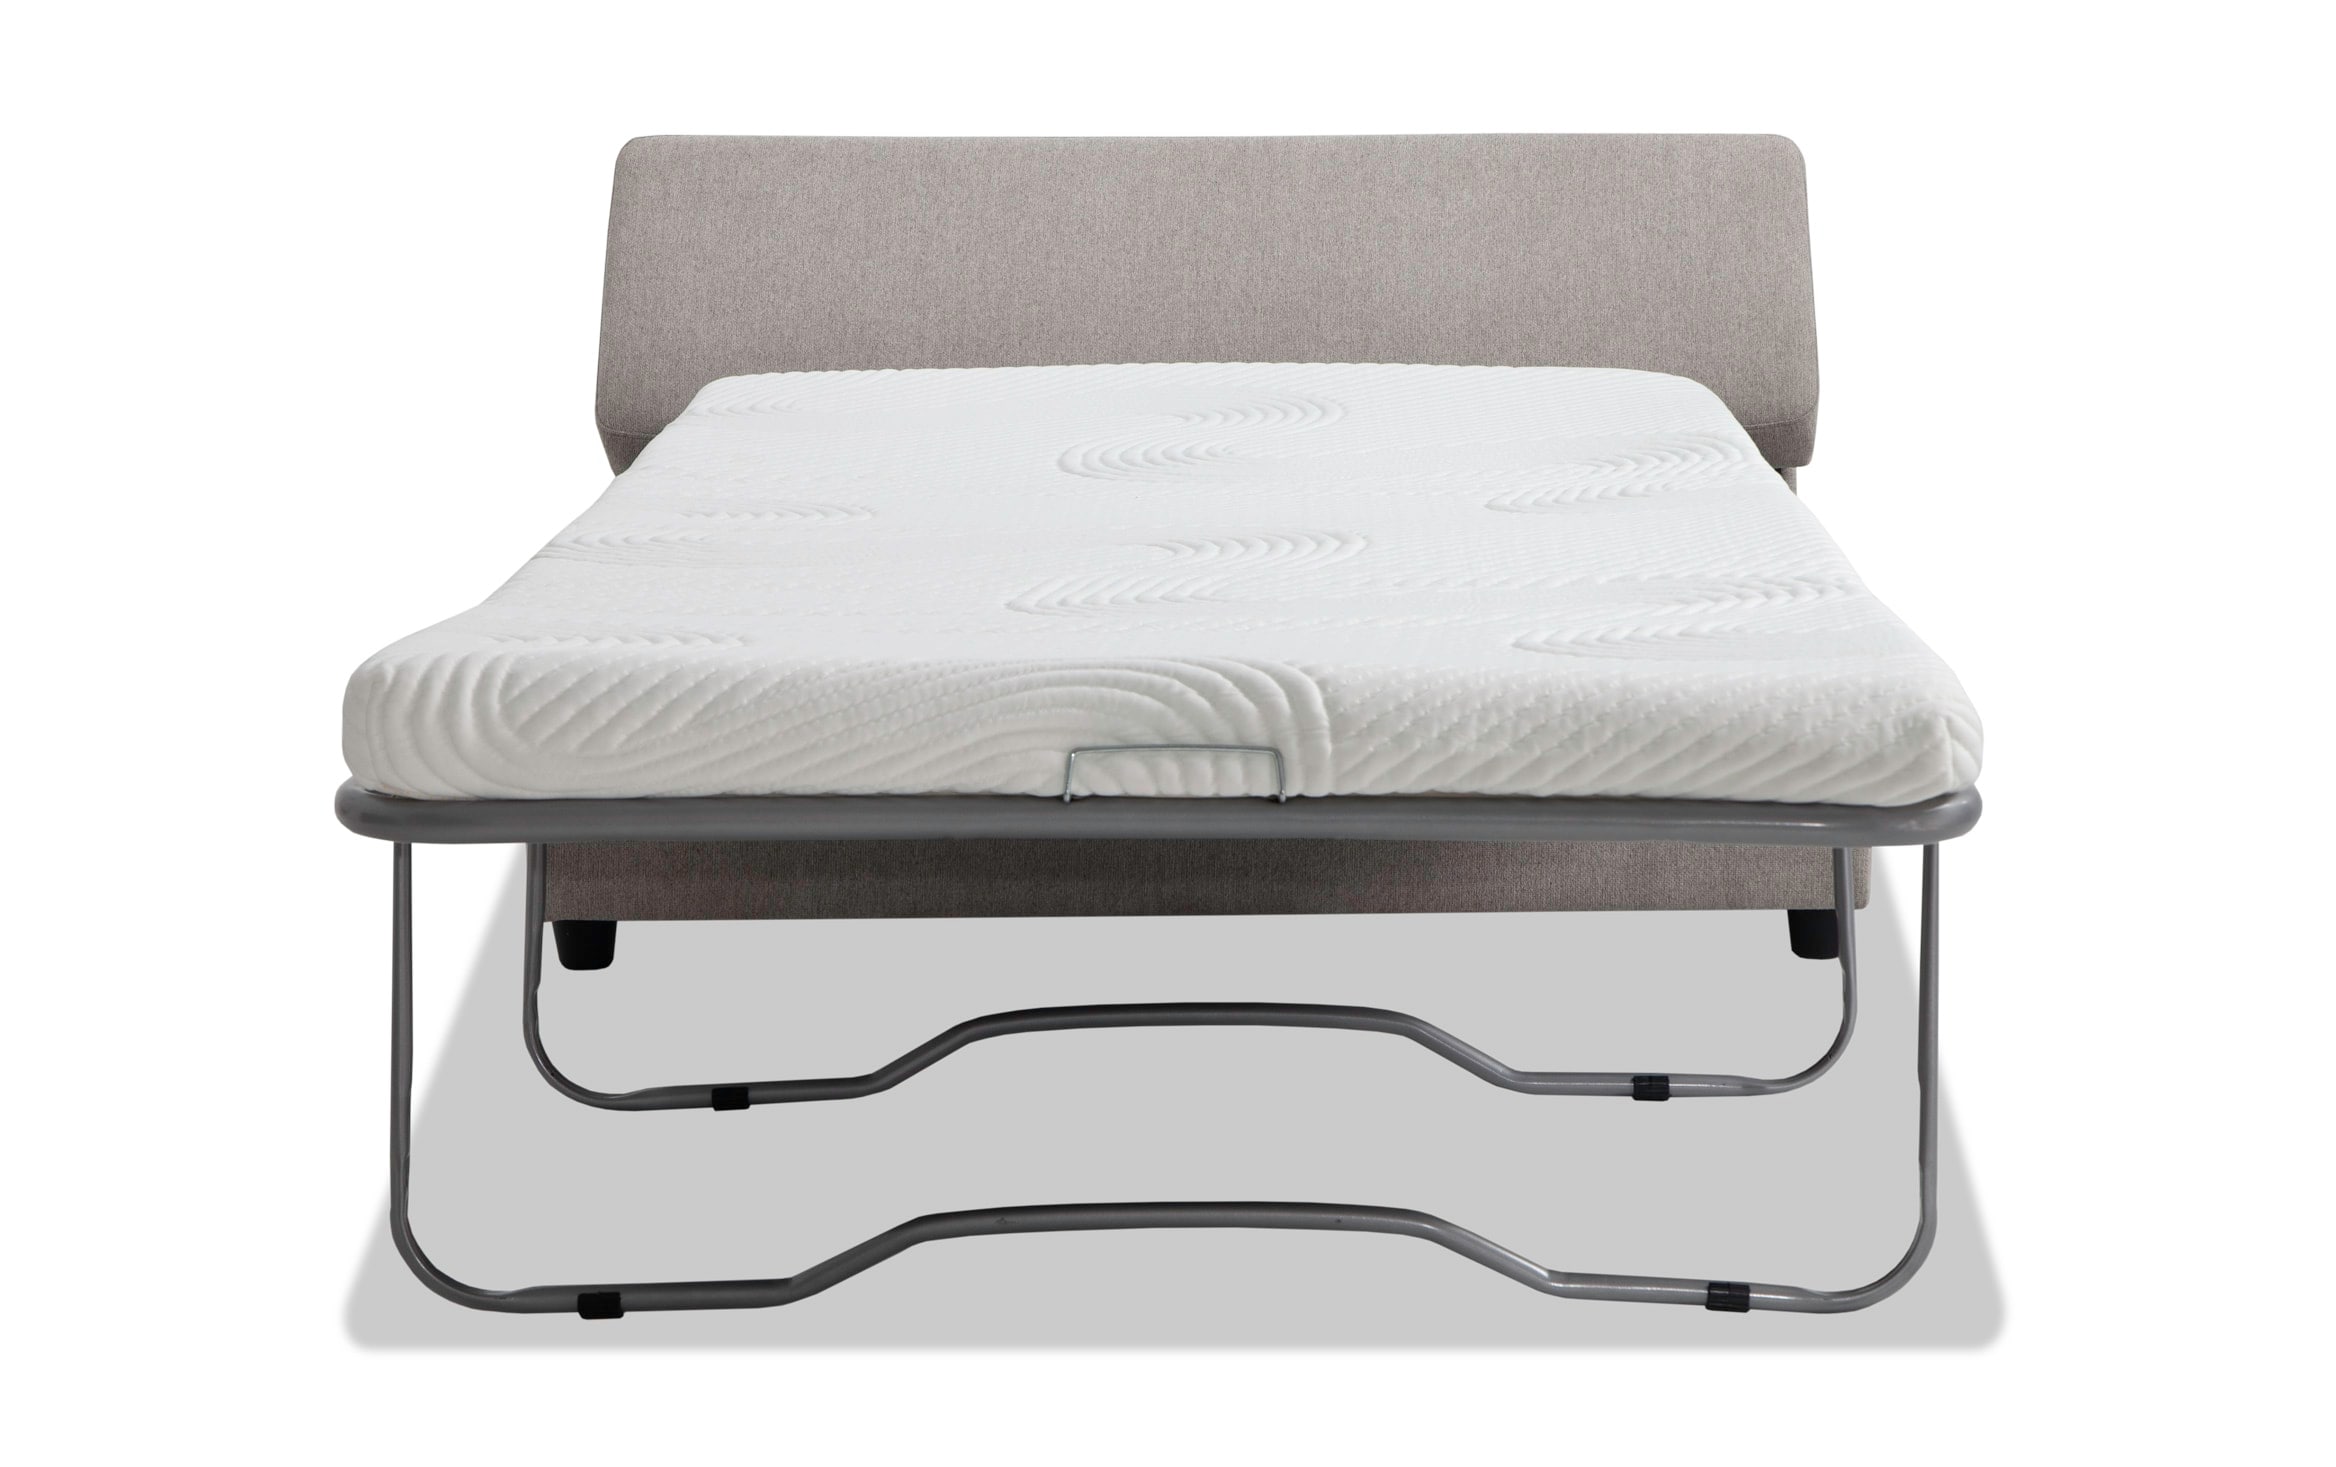 Bob O Pedic Gray Sleeper Ottoman, Bobs Furniture Bunk Bed Reviews